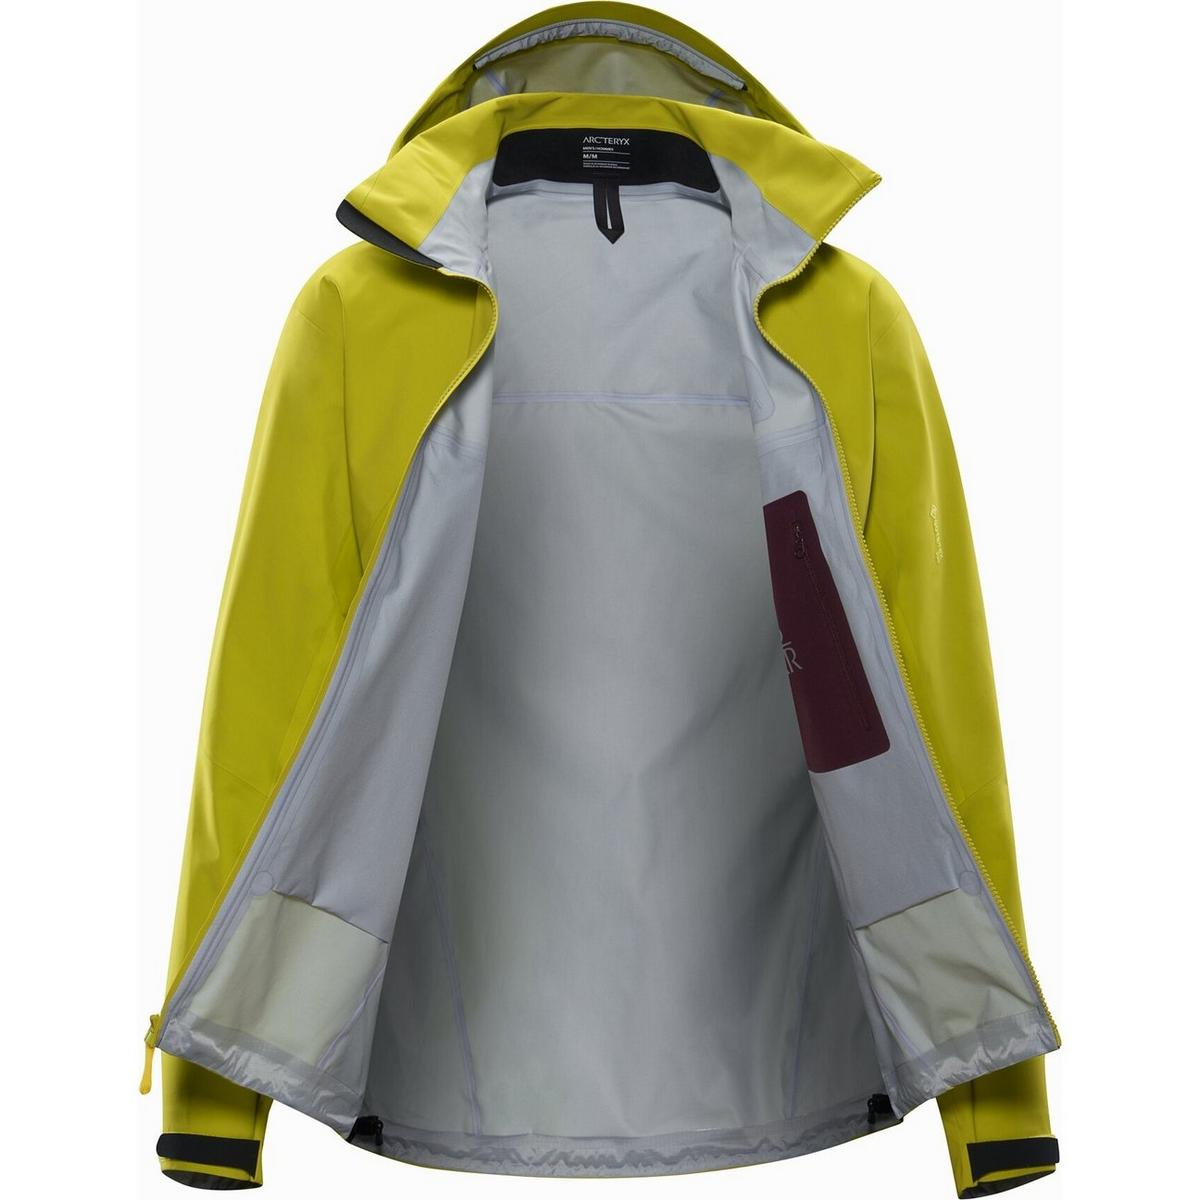 Men's Arcteryx Beta AR Jacket | Men's Waterproof Jacket | George 